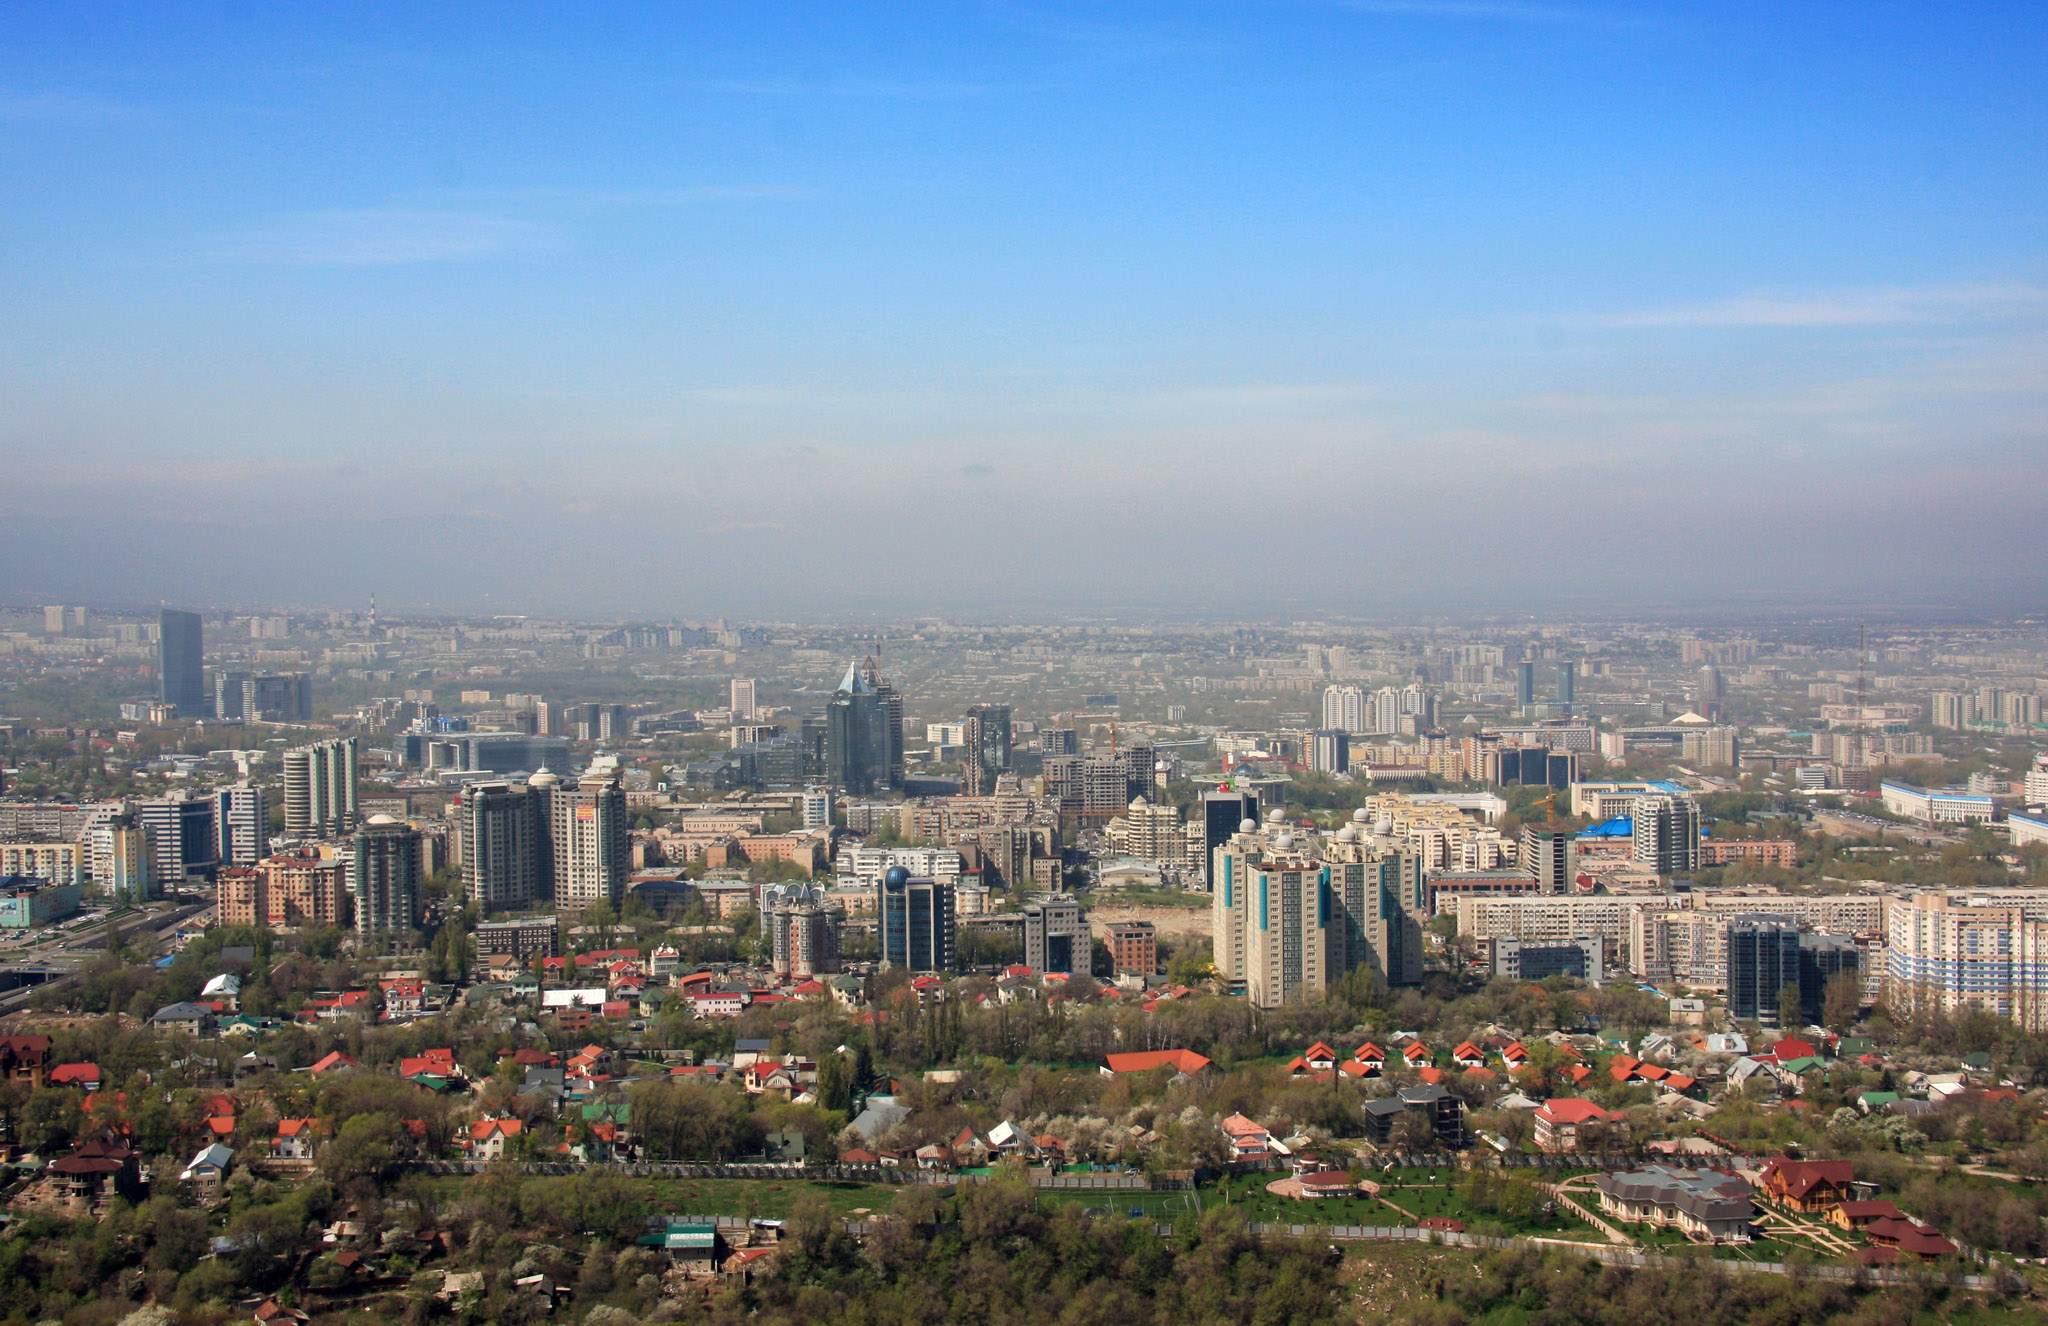 http://www.net4info.de/photos/cpg/albums/userpics/10001/Almaty.jpg